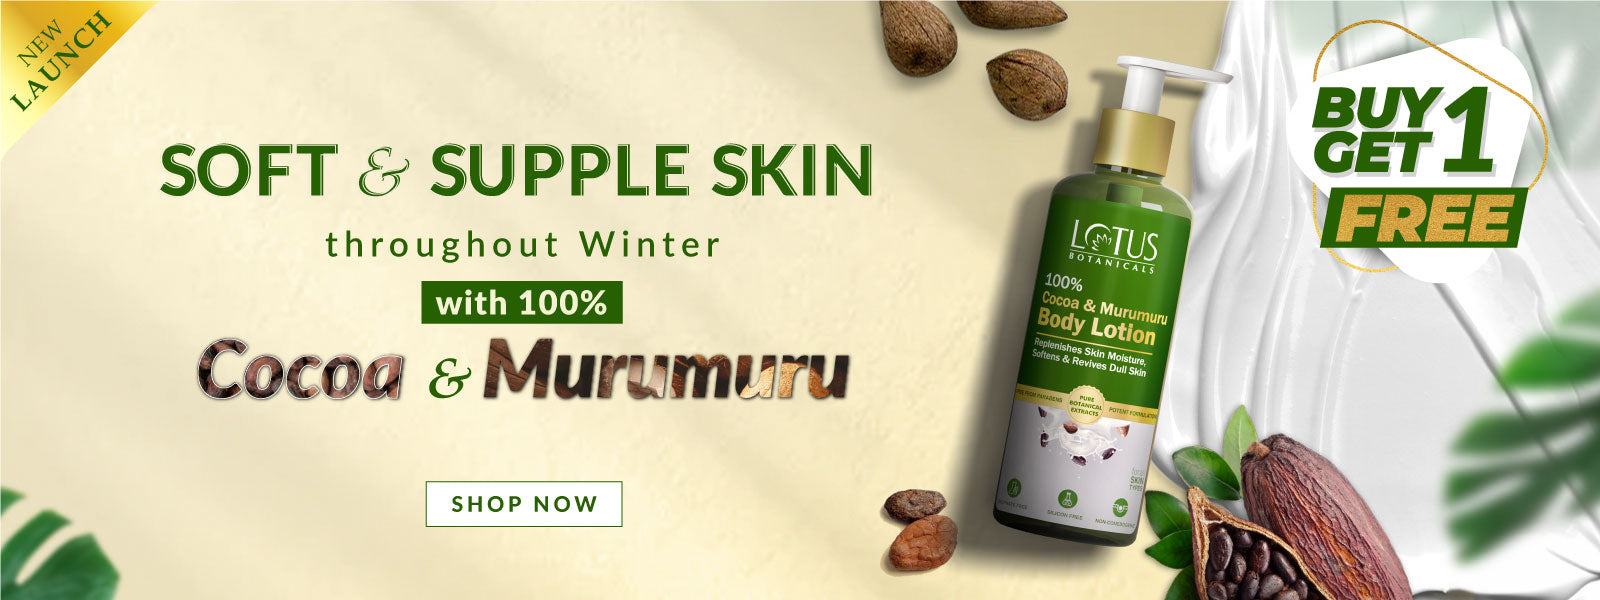 100% Cocoa & Murumuru Body Lotion